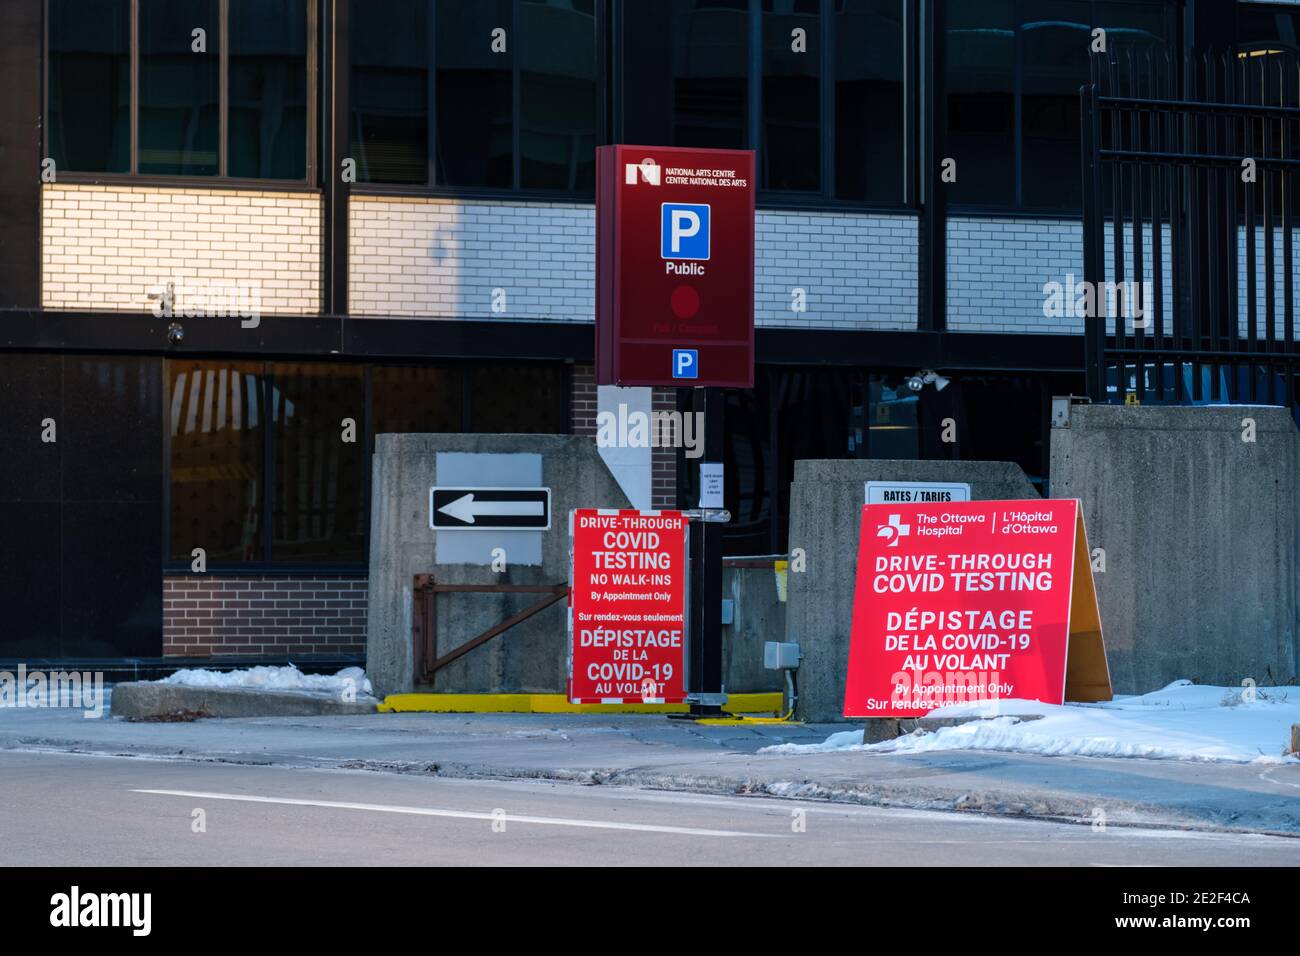 Ottawa, Ontario, Canada - January 8, 2021: The Albert Street entrance to the National Arts Centre (NAC) parking garage, where The Ottawa Hospital is c Stock Photo